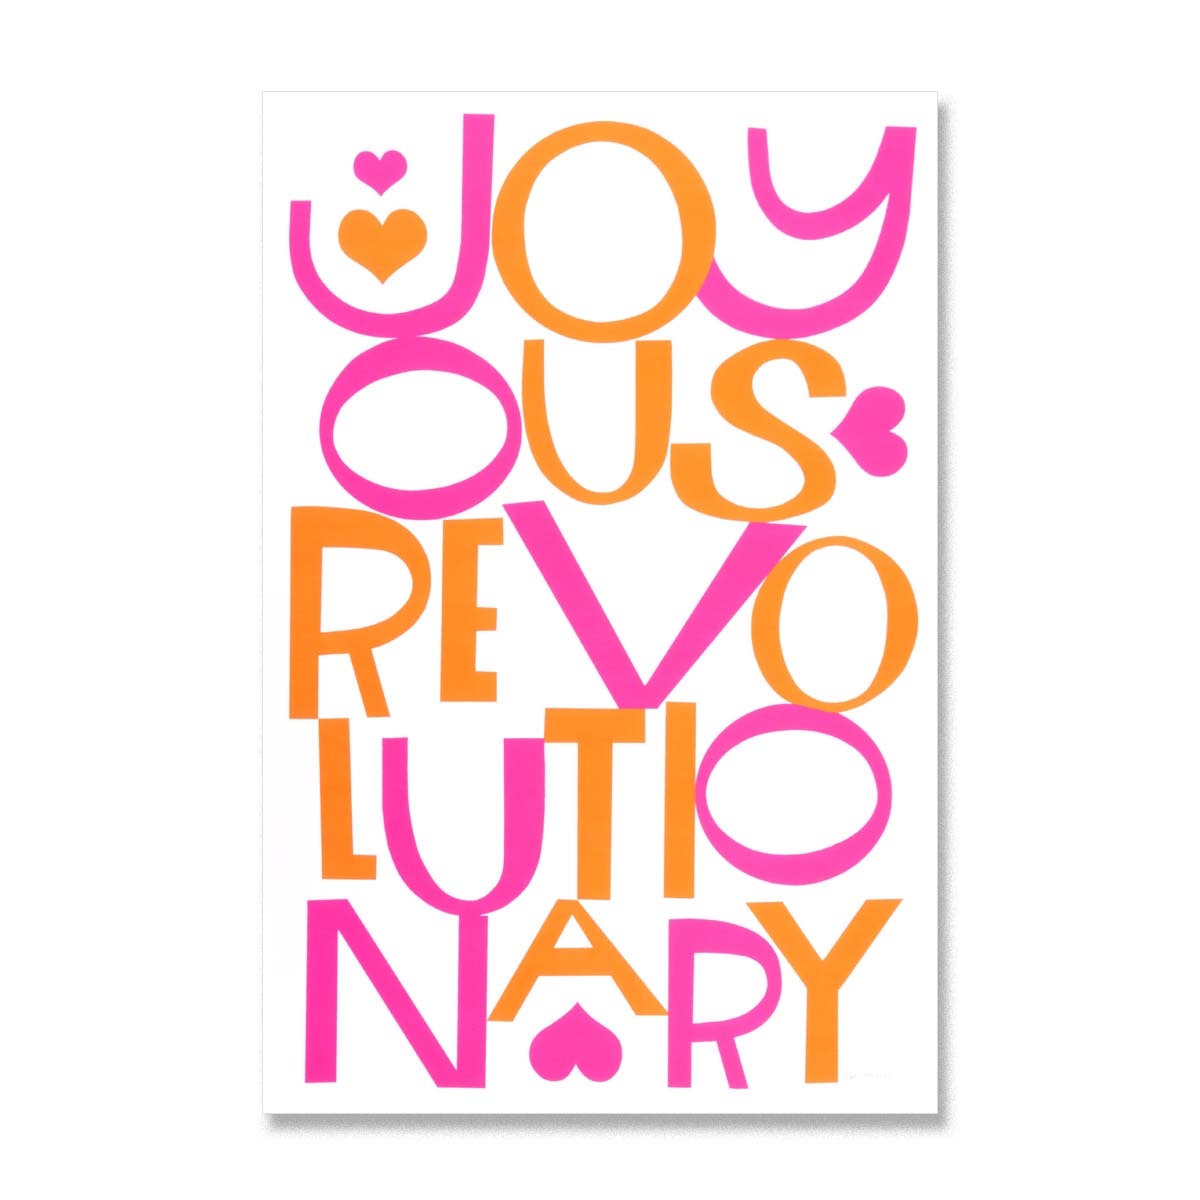 Joyous Revolutionary - Limited Edition Serigraph